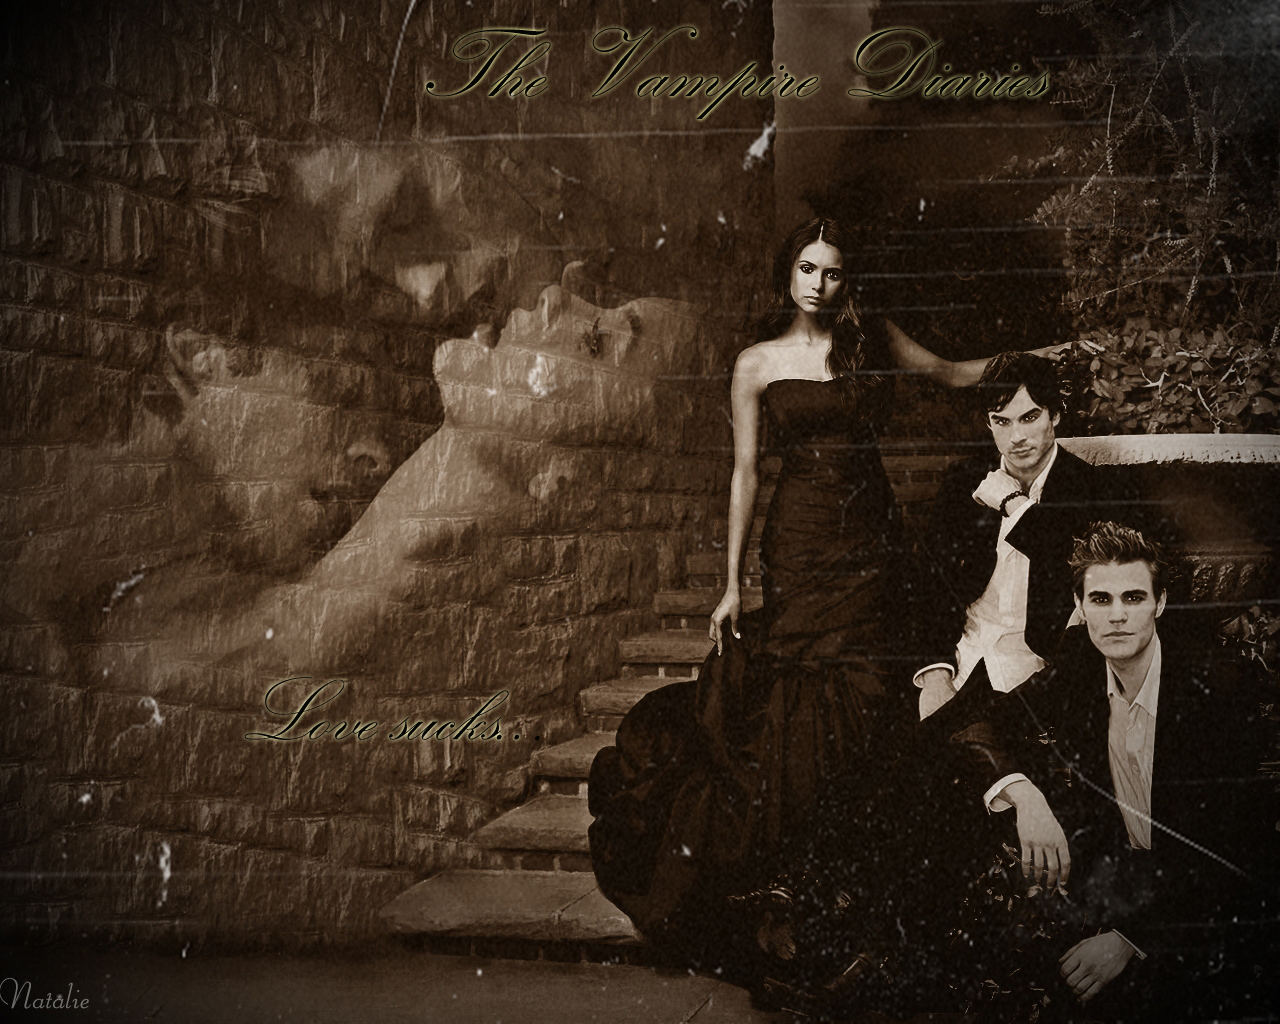 The Vampire Diaries Image Wallpaper Photos